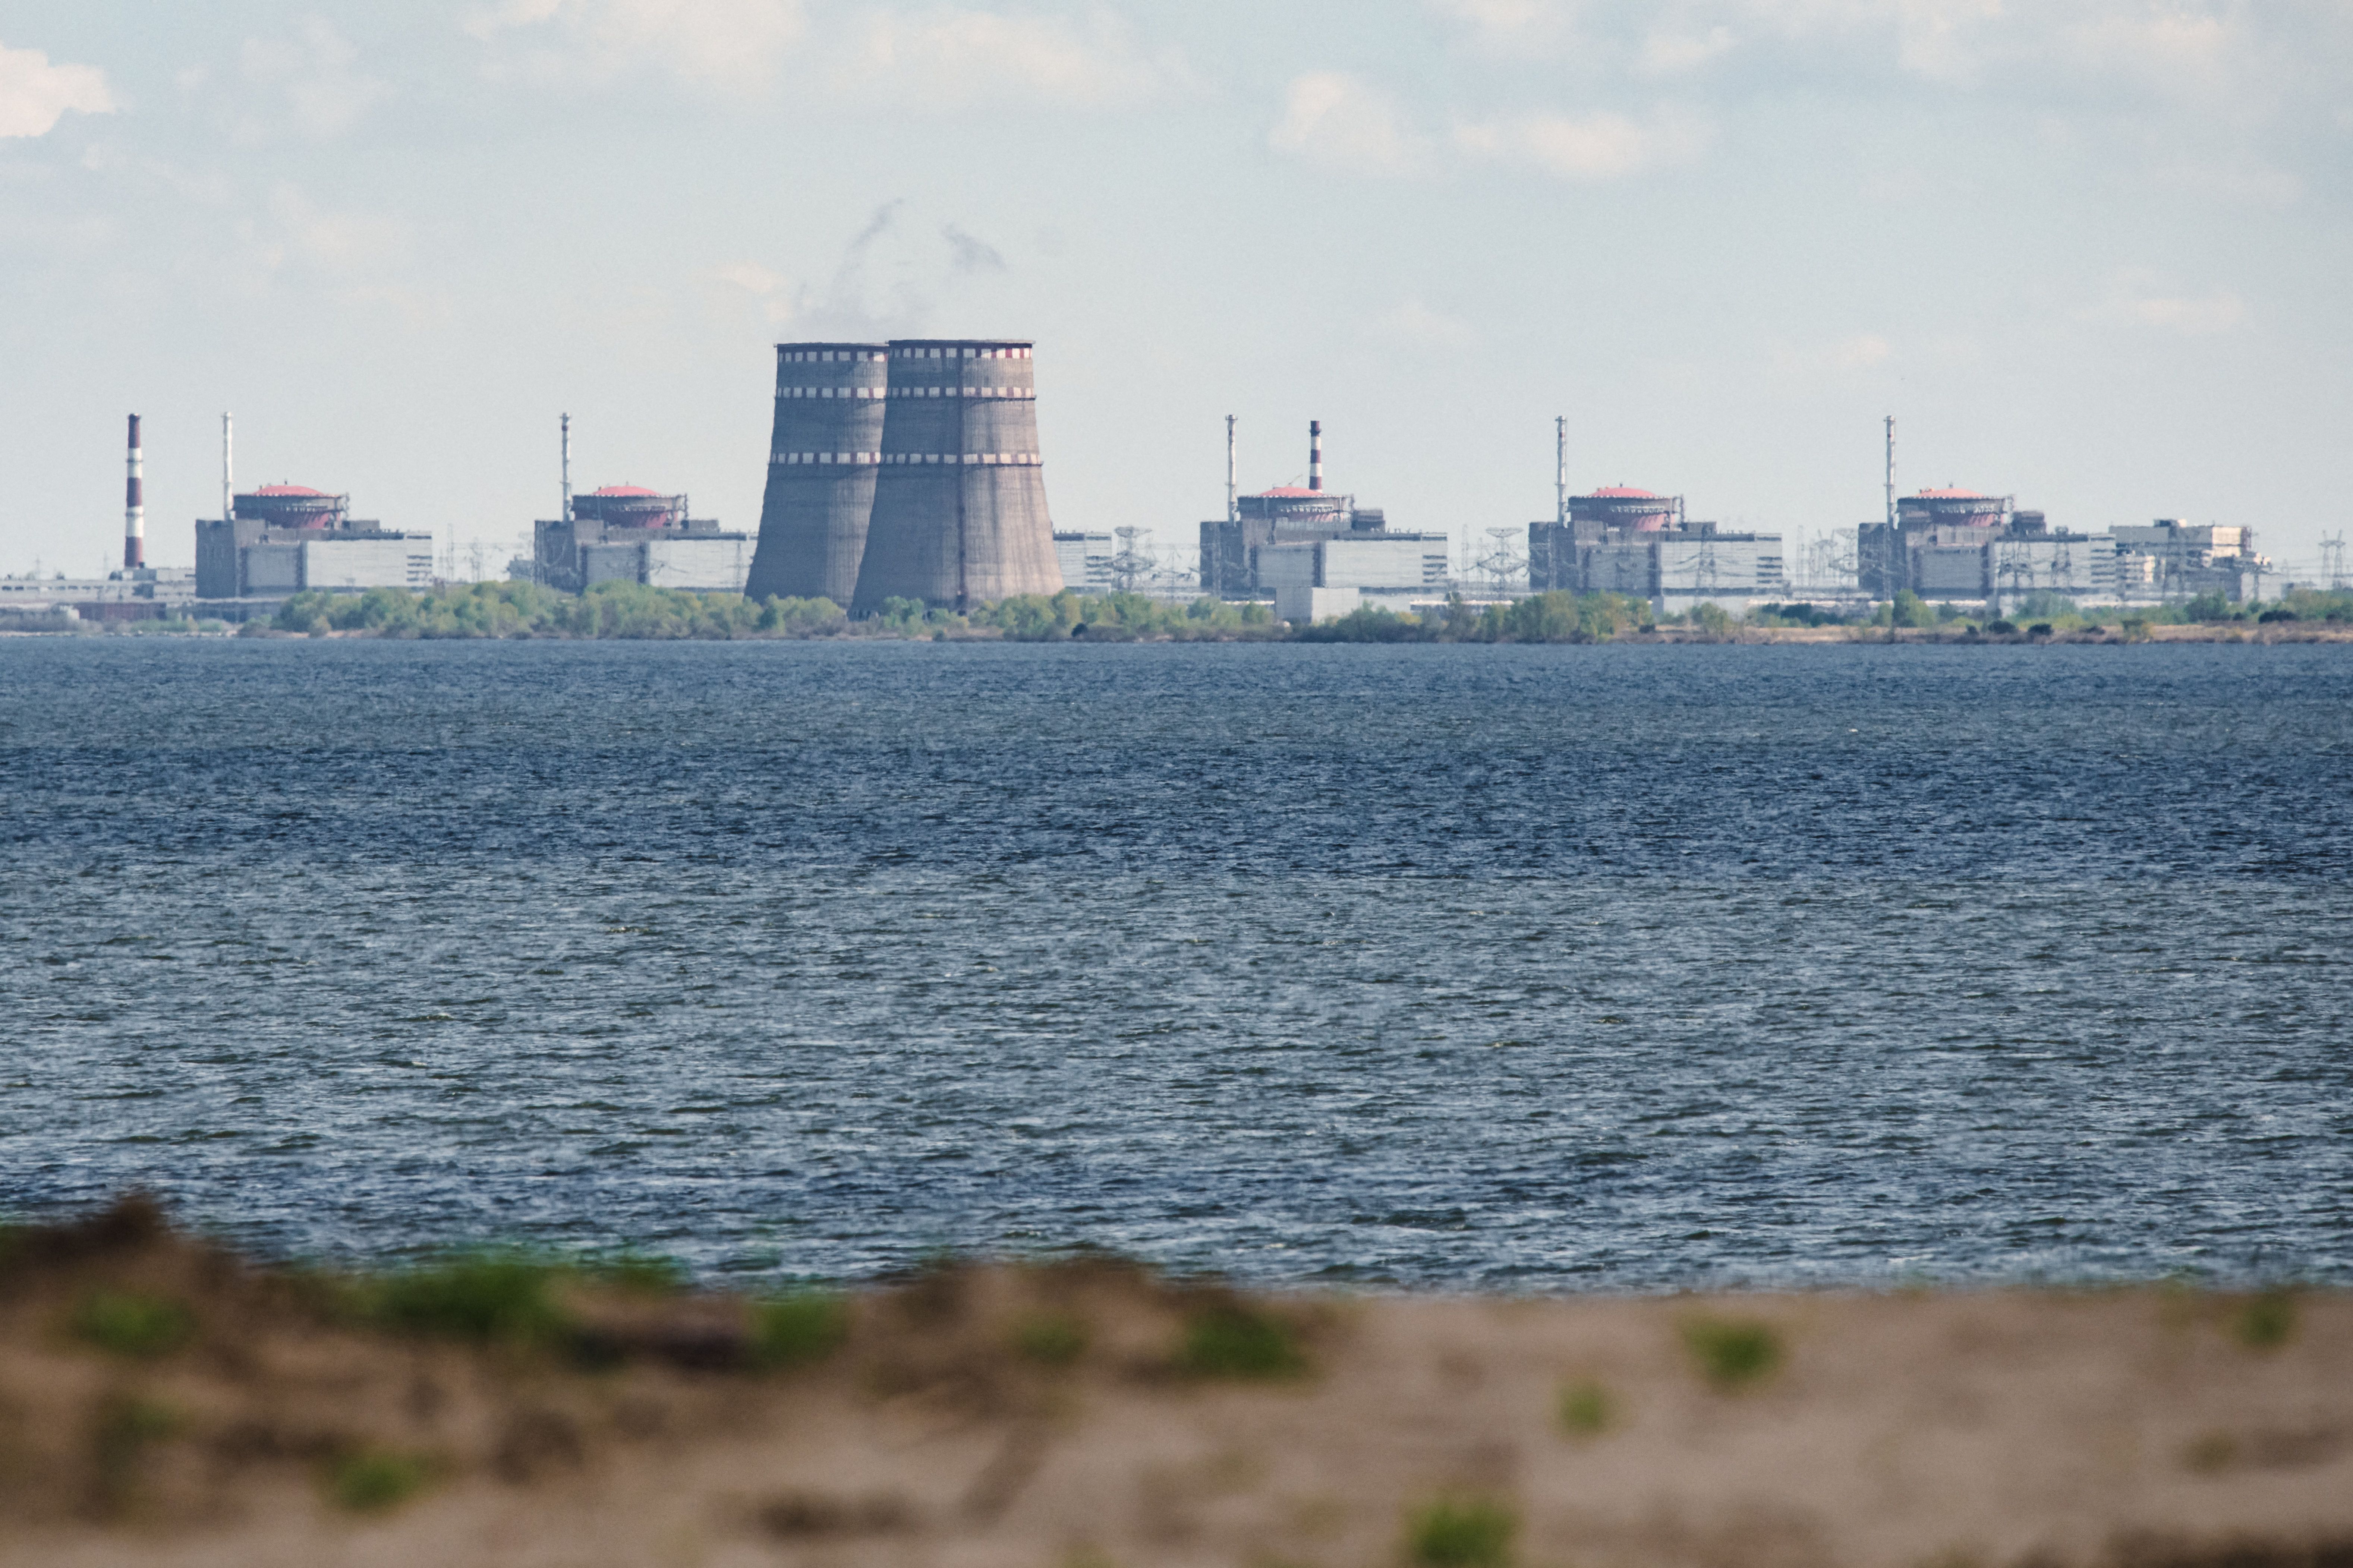  The Zaporizhzhia nuclear power plant